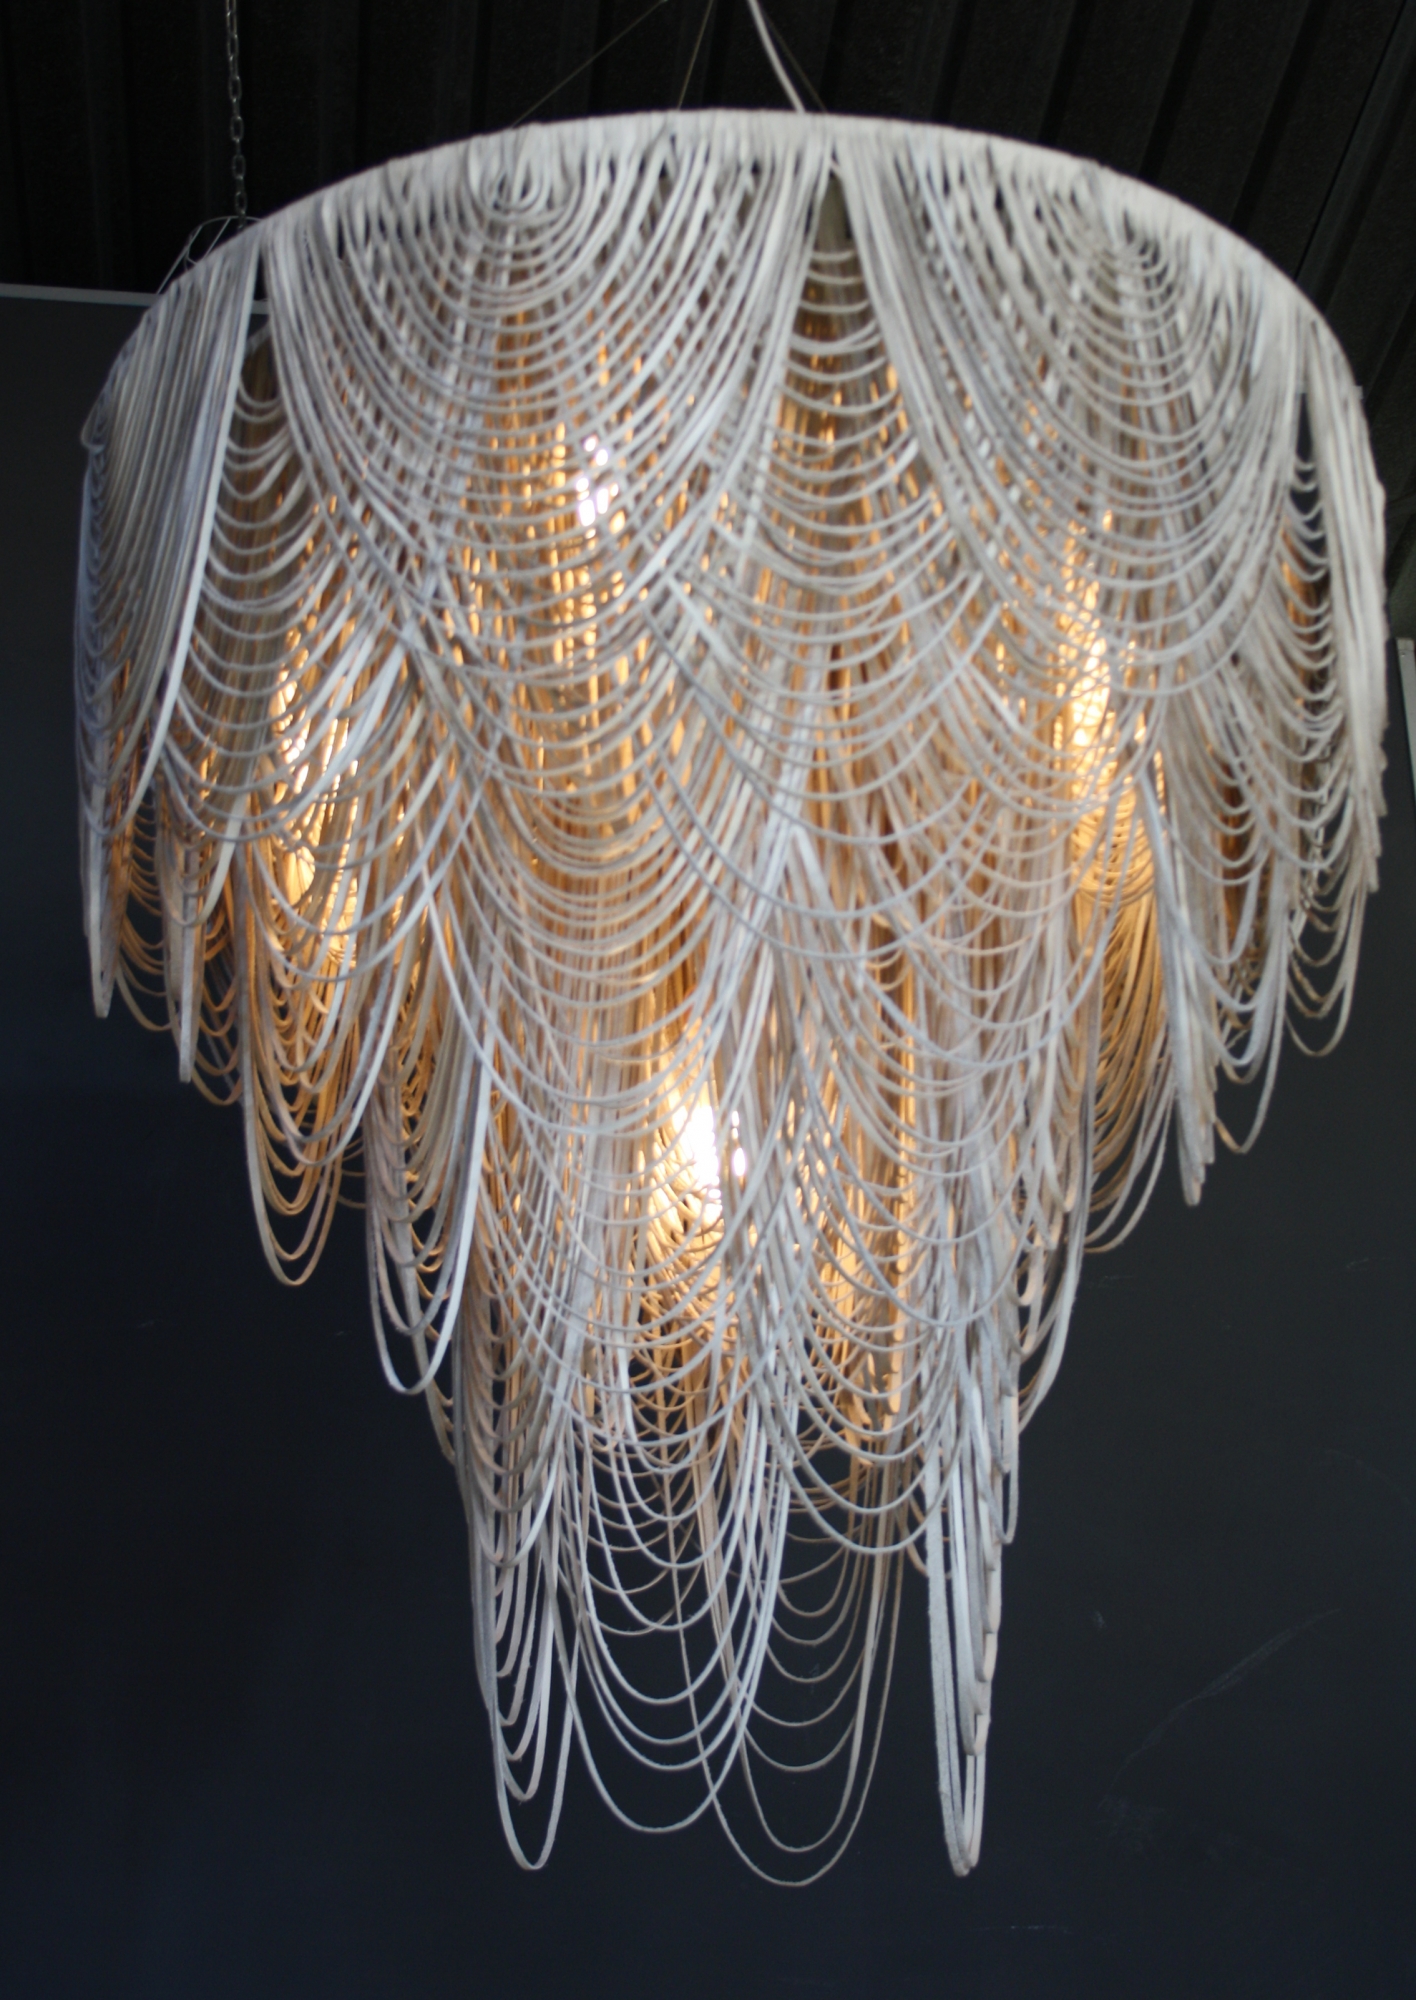 Whisper chandelier by High Thorn | Design Indaba